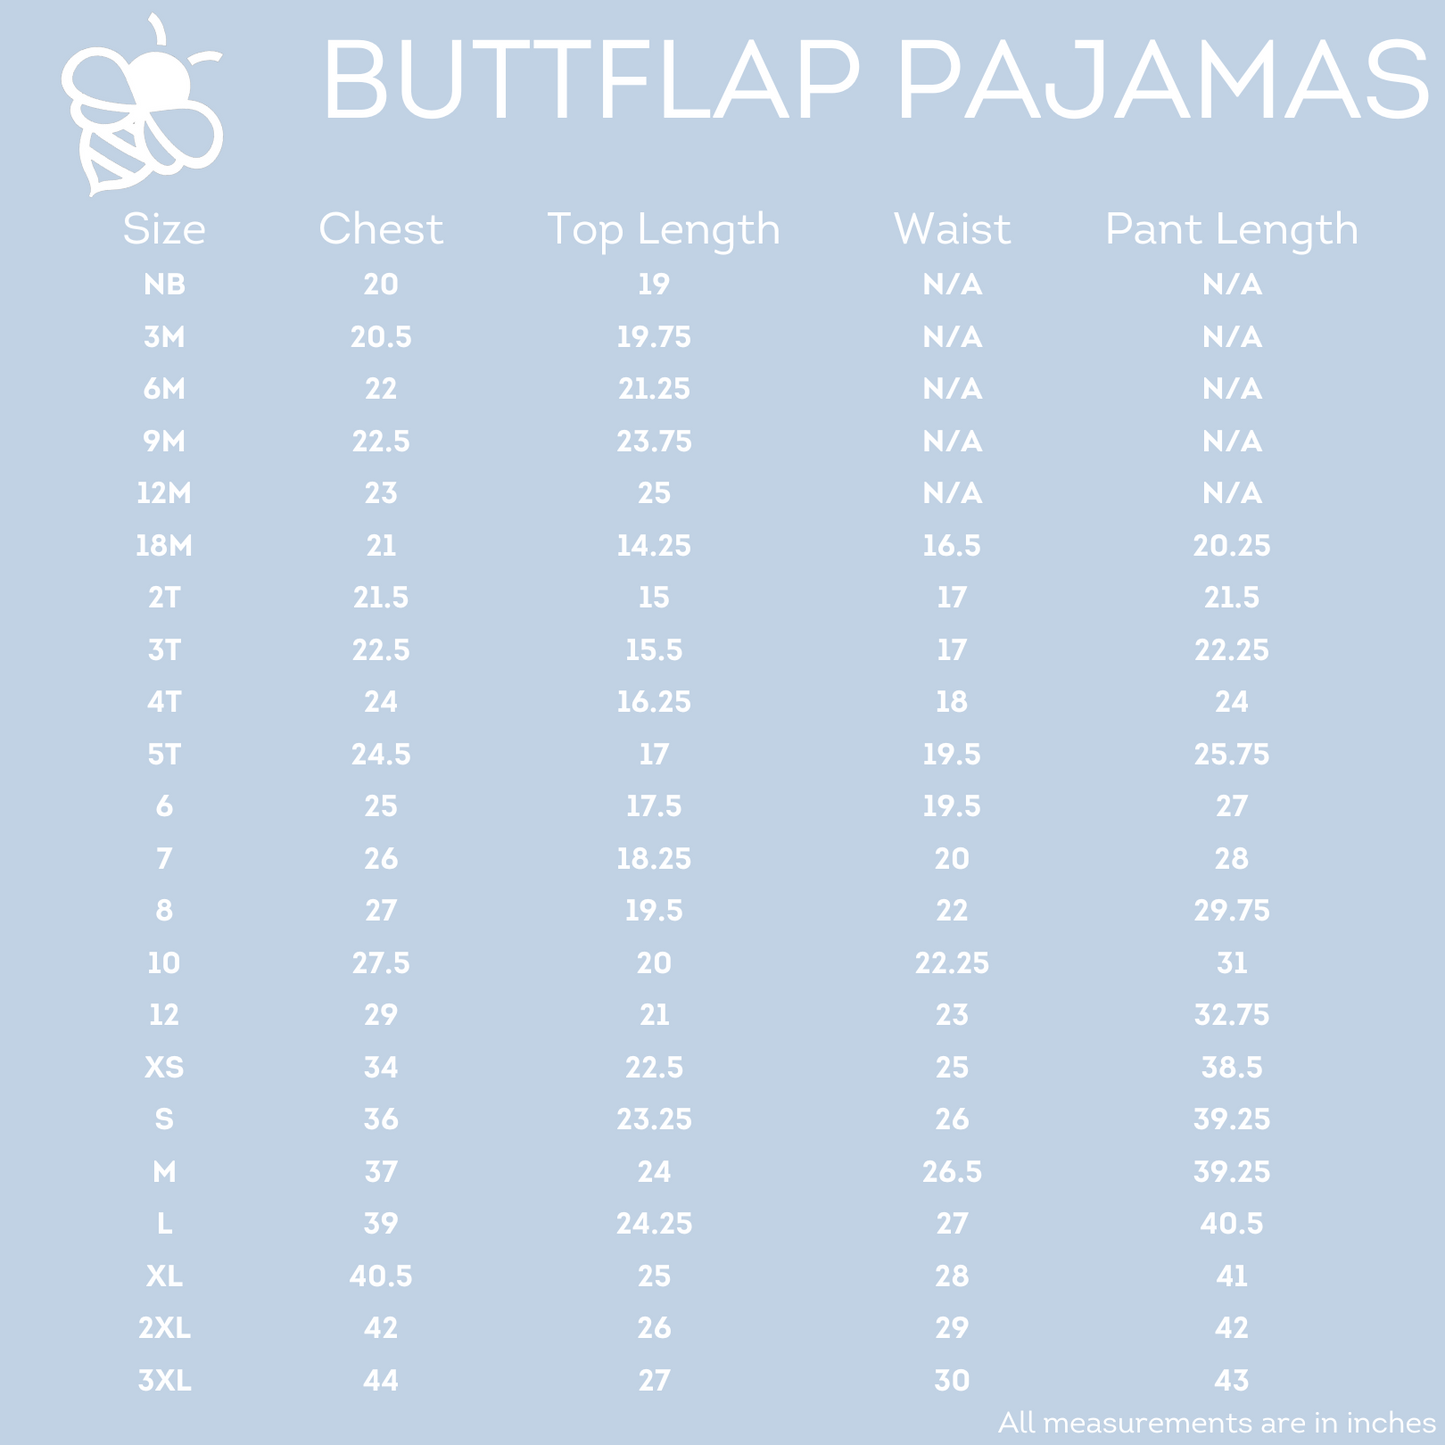 Ruffle Buttflap Pajamas - Uptown Plaid